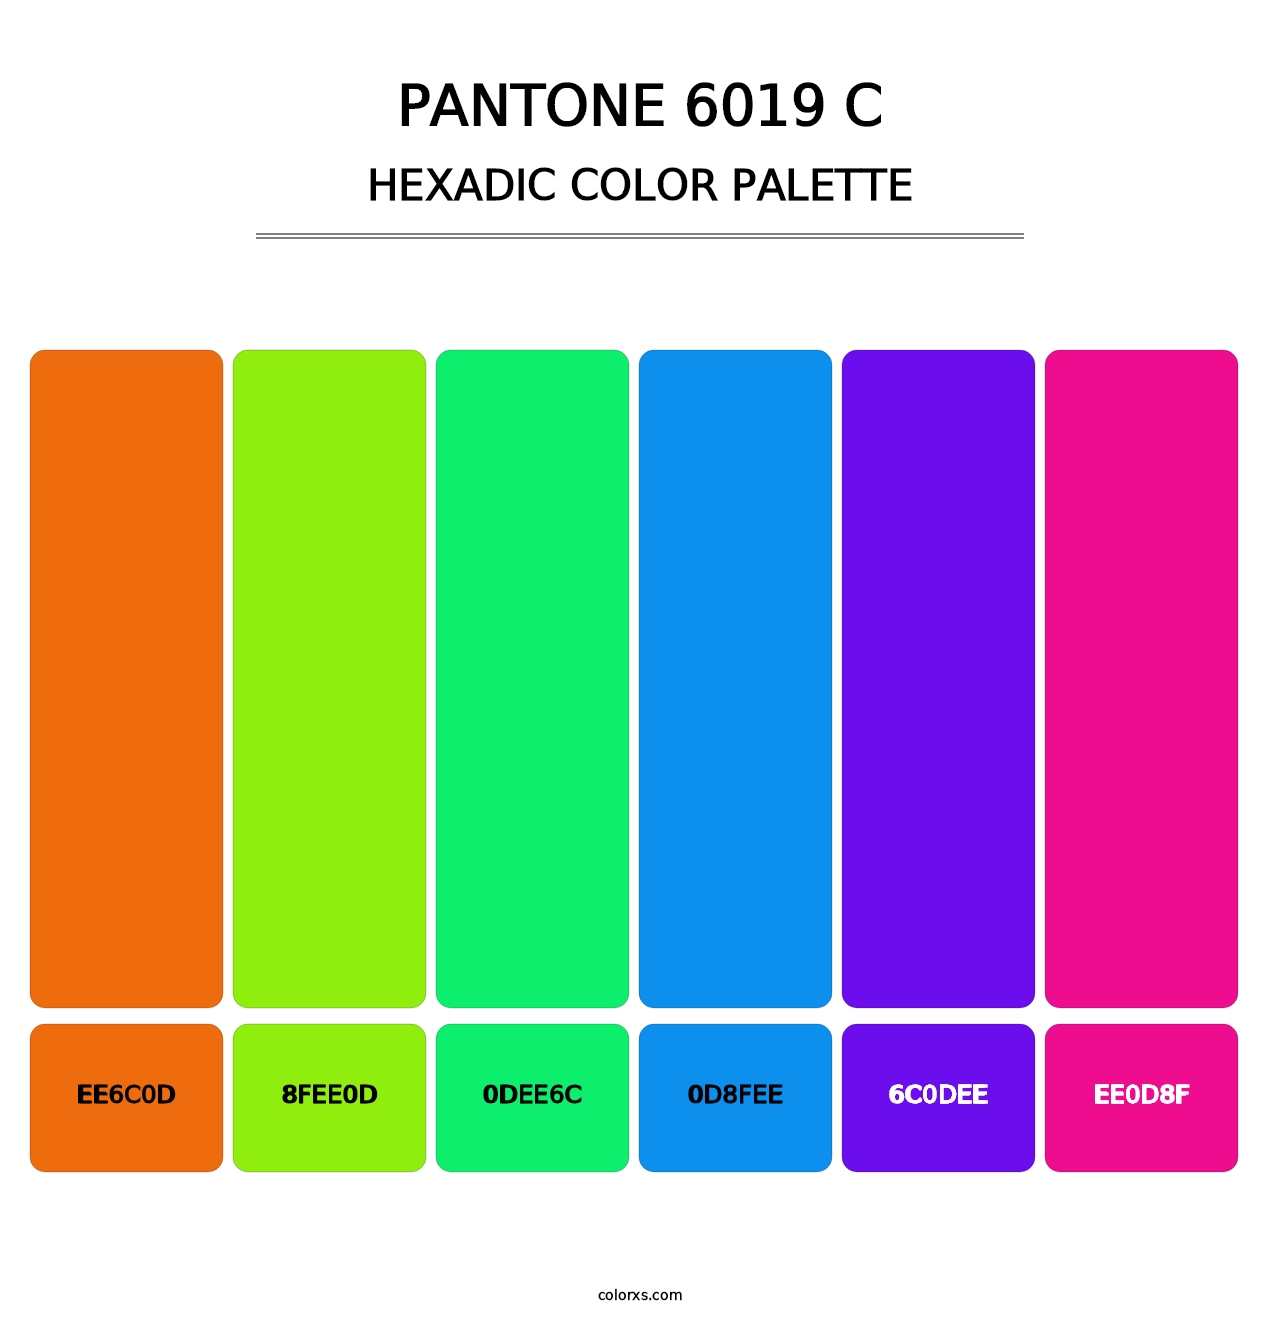 PANTONE 6019 C - Hexadic Color Palette